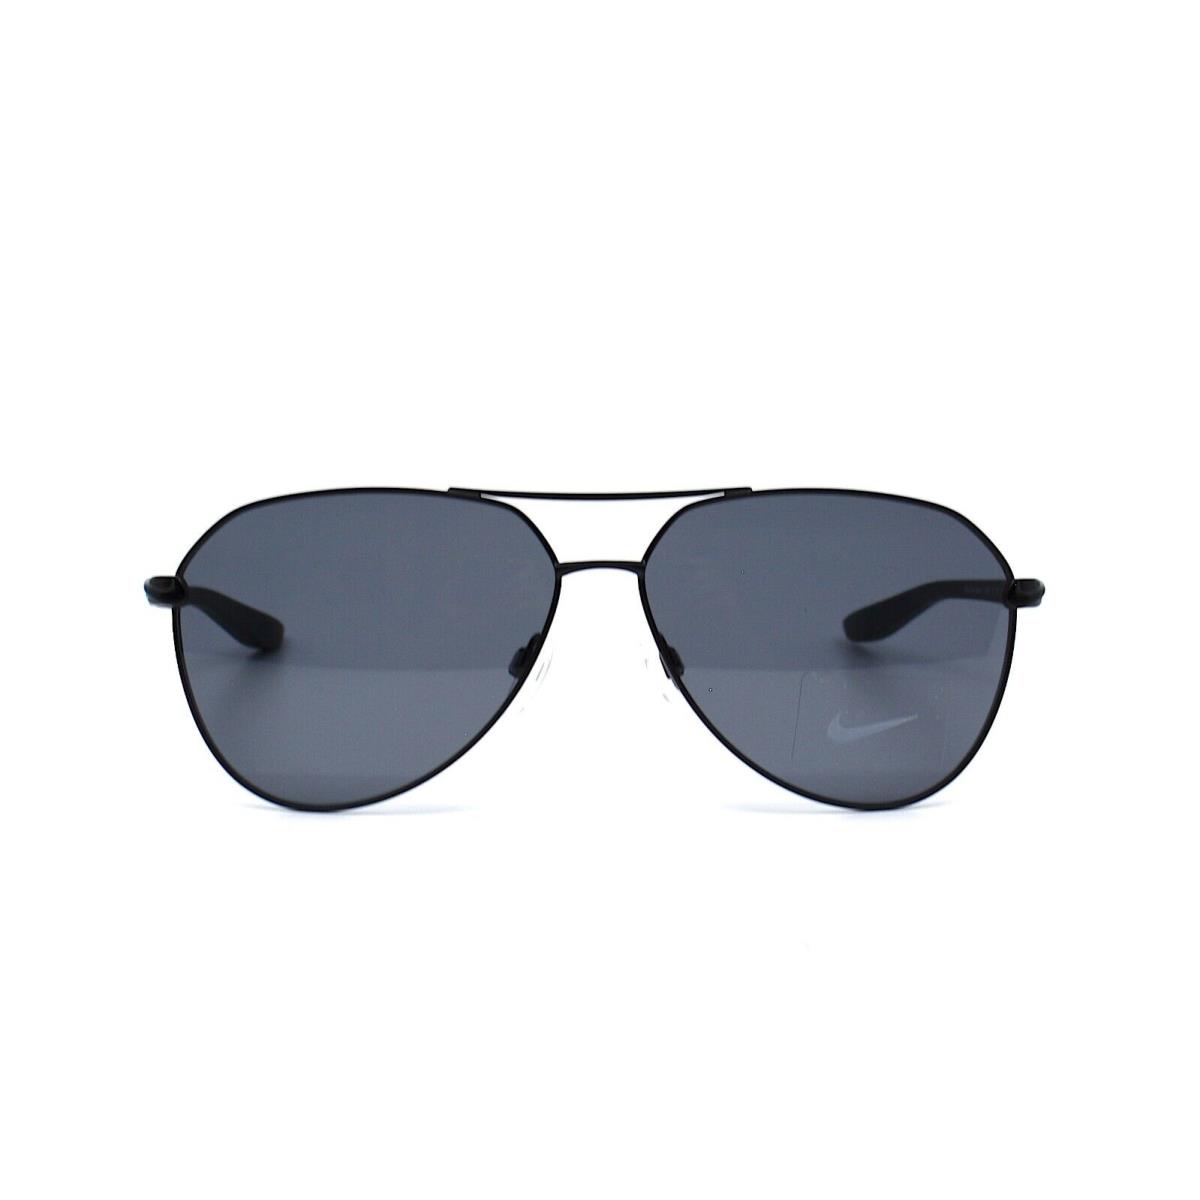 Nike Sity Aviator DJ0888 Black Dark Grey Sunglasses